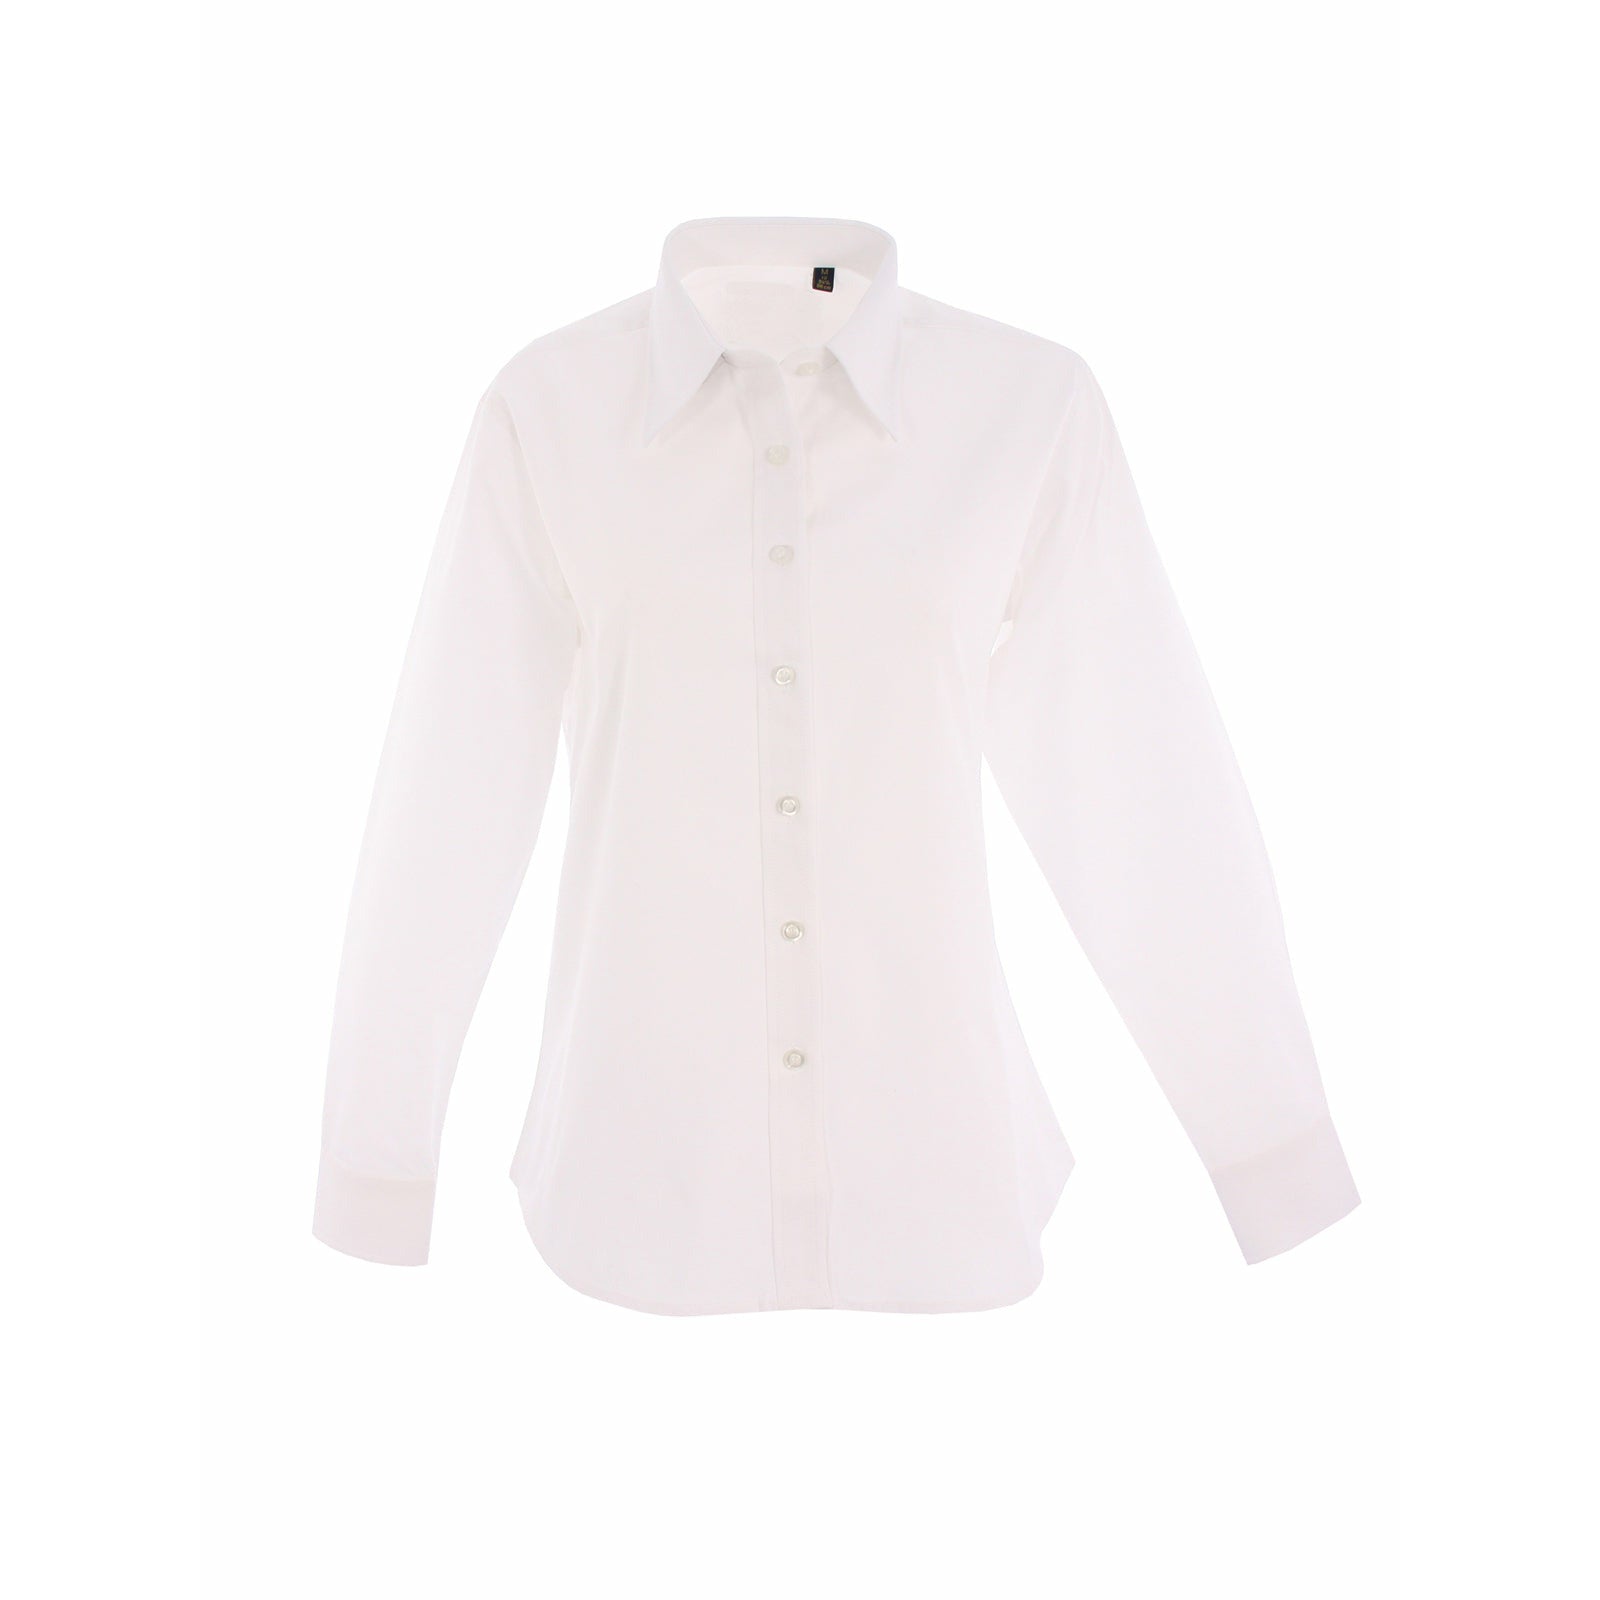 Ladies Pinpoint Oxford Full Sleeve Shirt - White